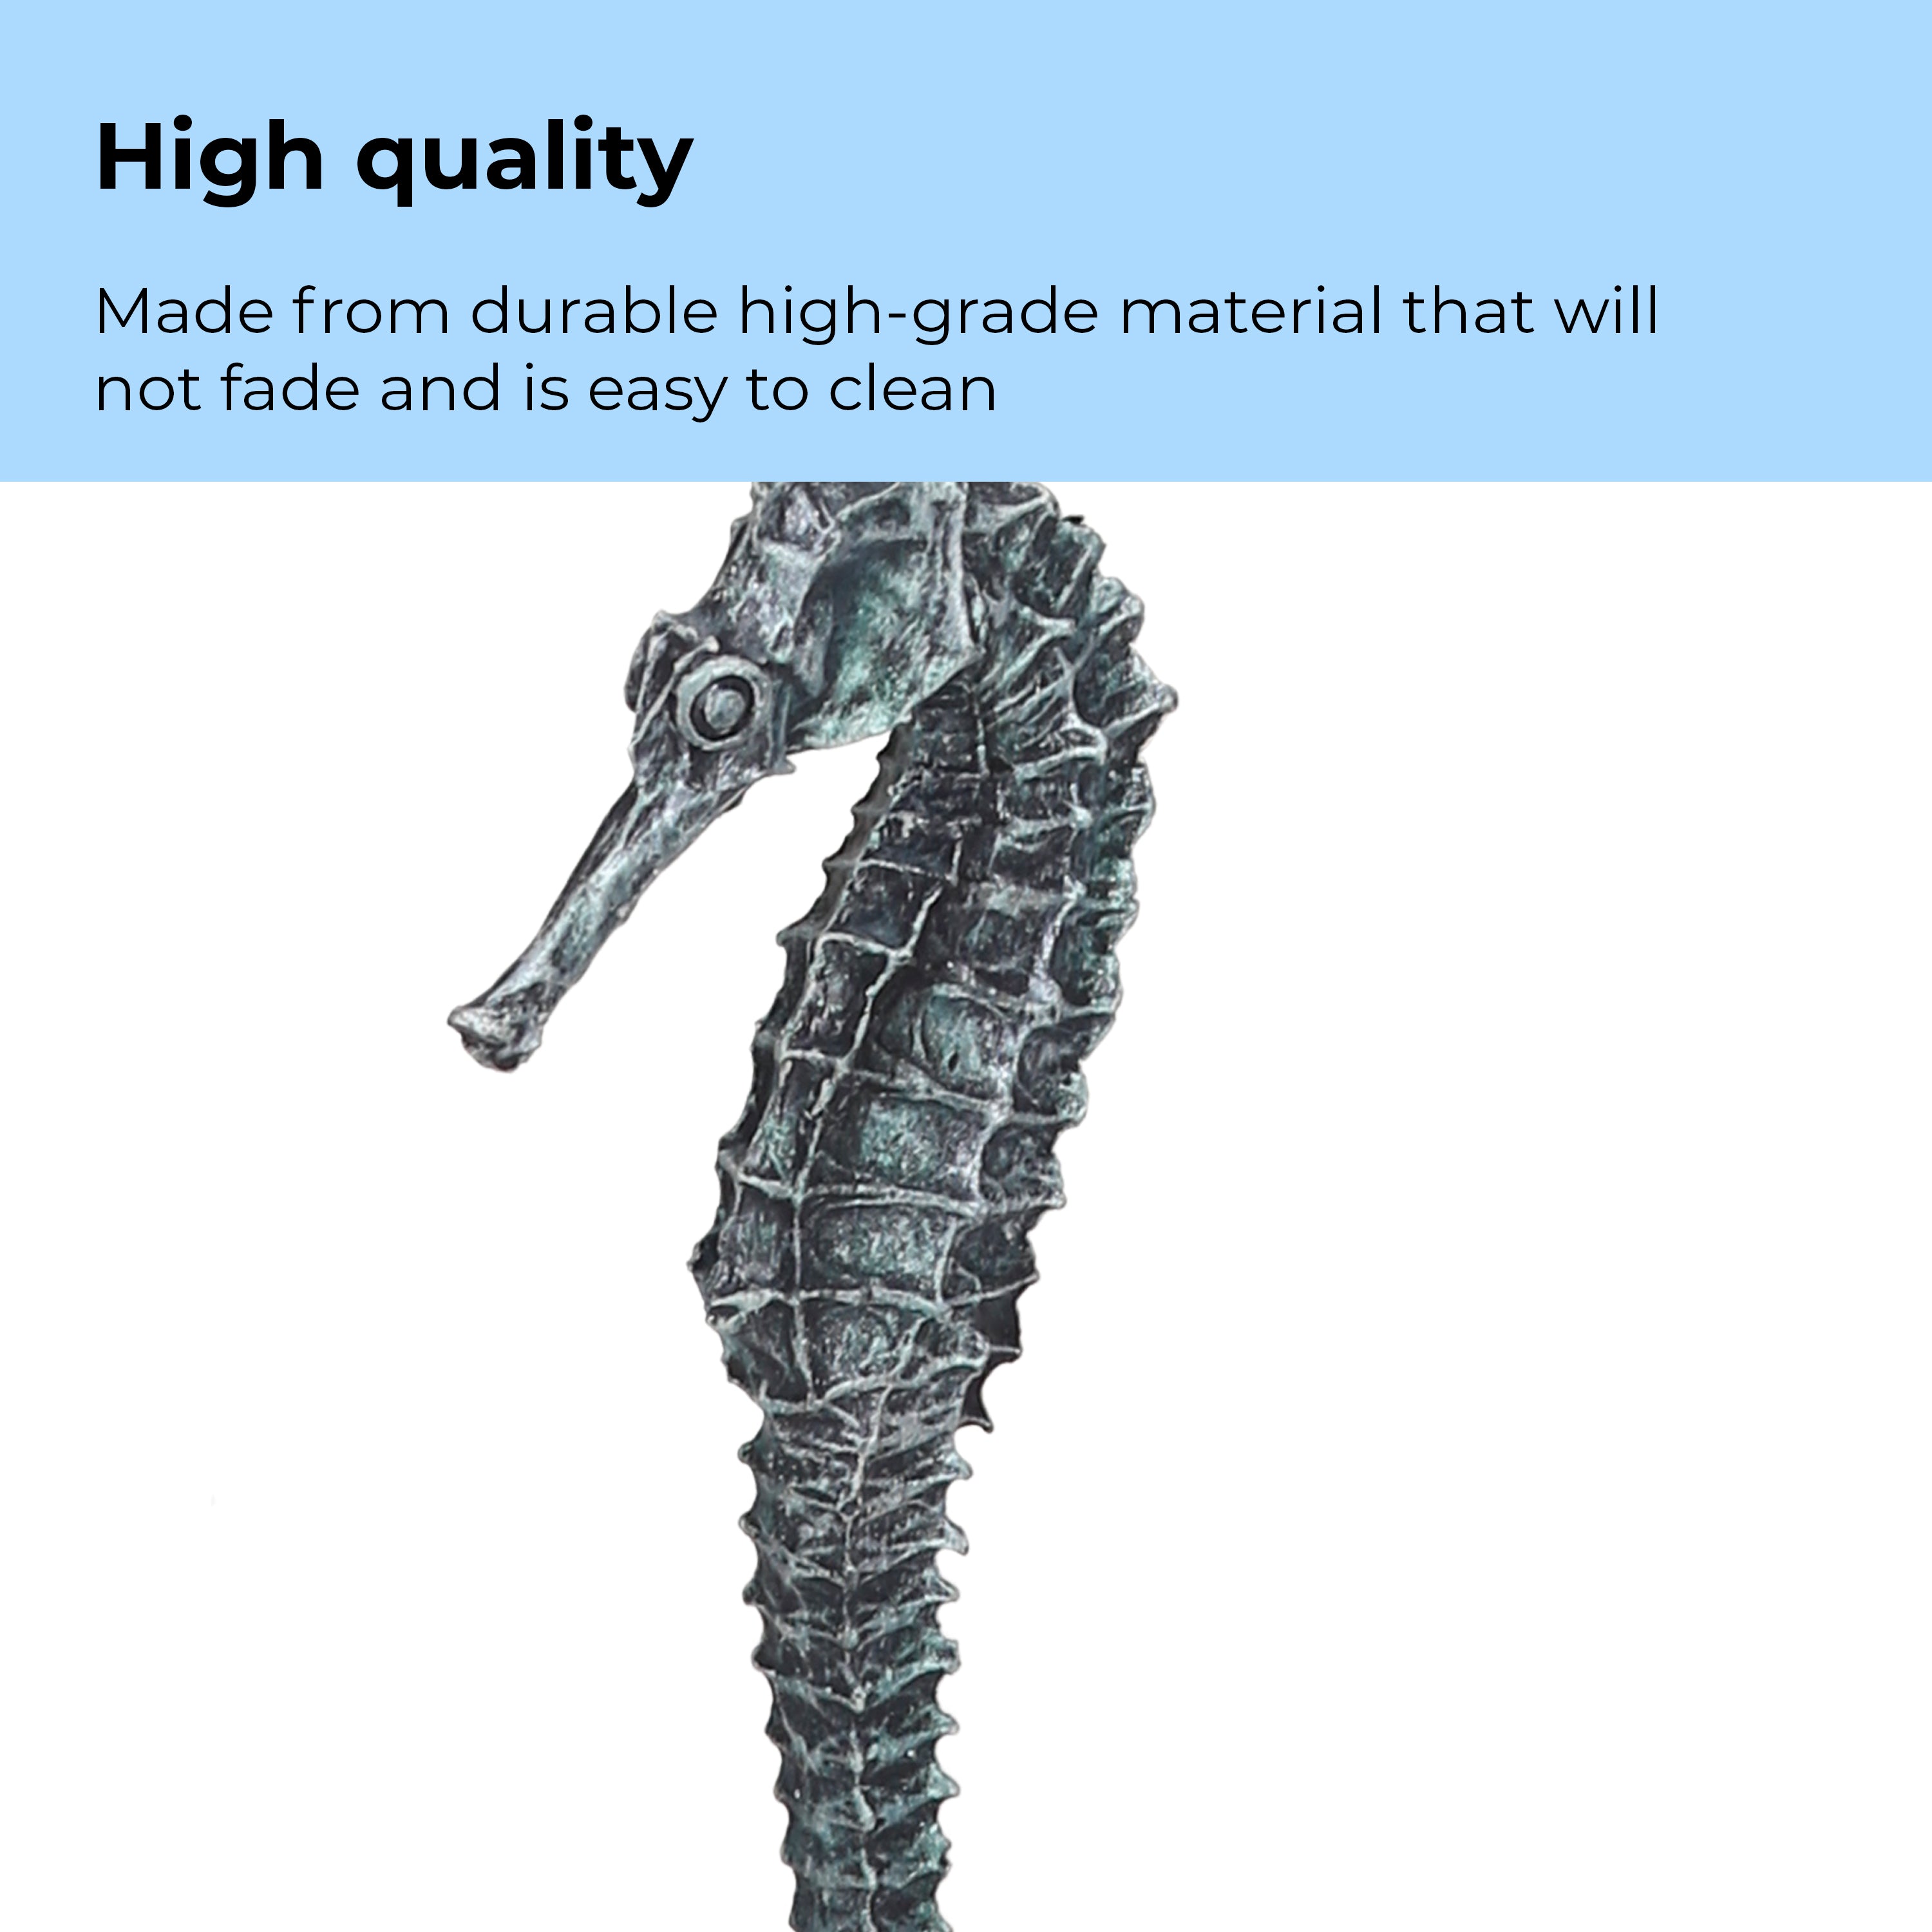 Seahorse Set - High quality